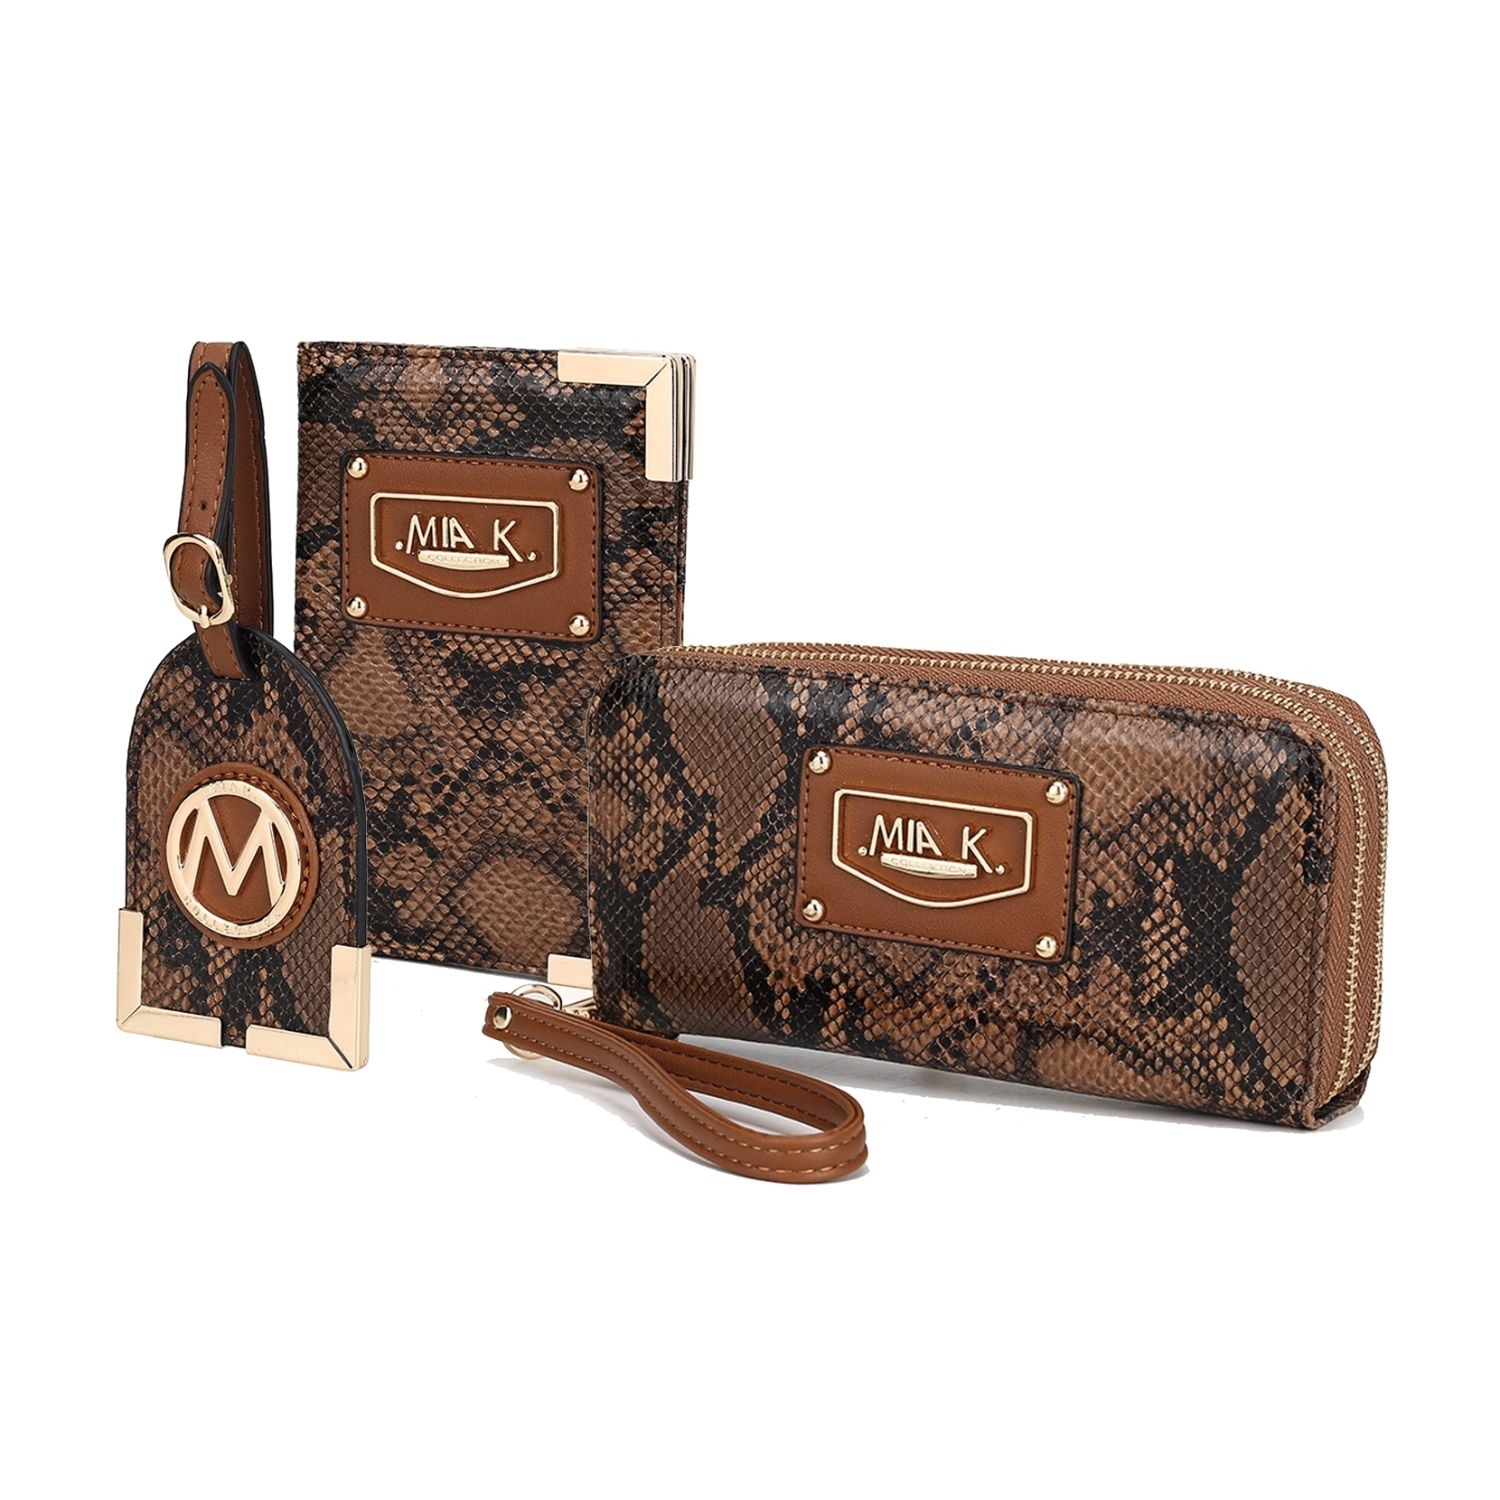 MKF Collection Darla Snake Travel Gift Set Handbag By Mia K 3 Pieces - Cognac